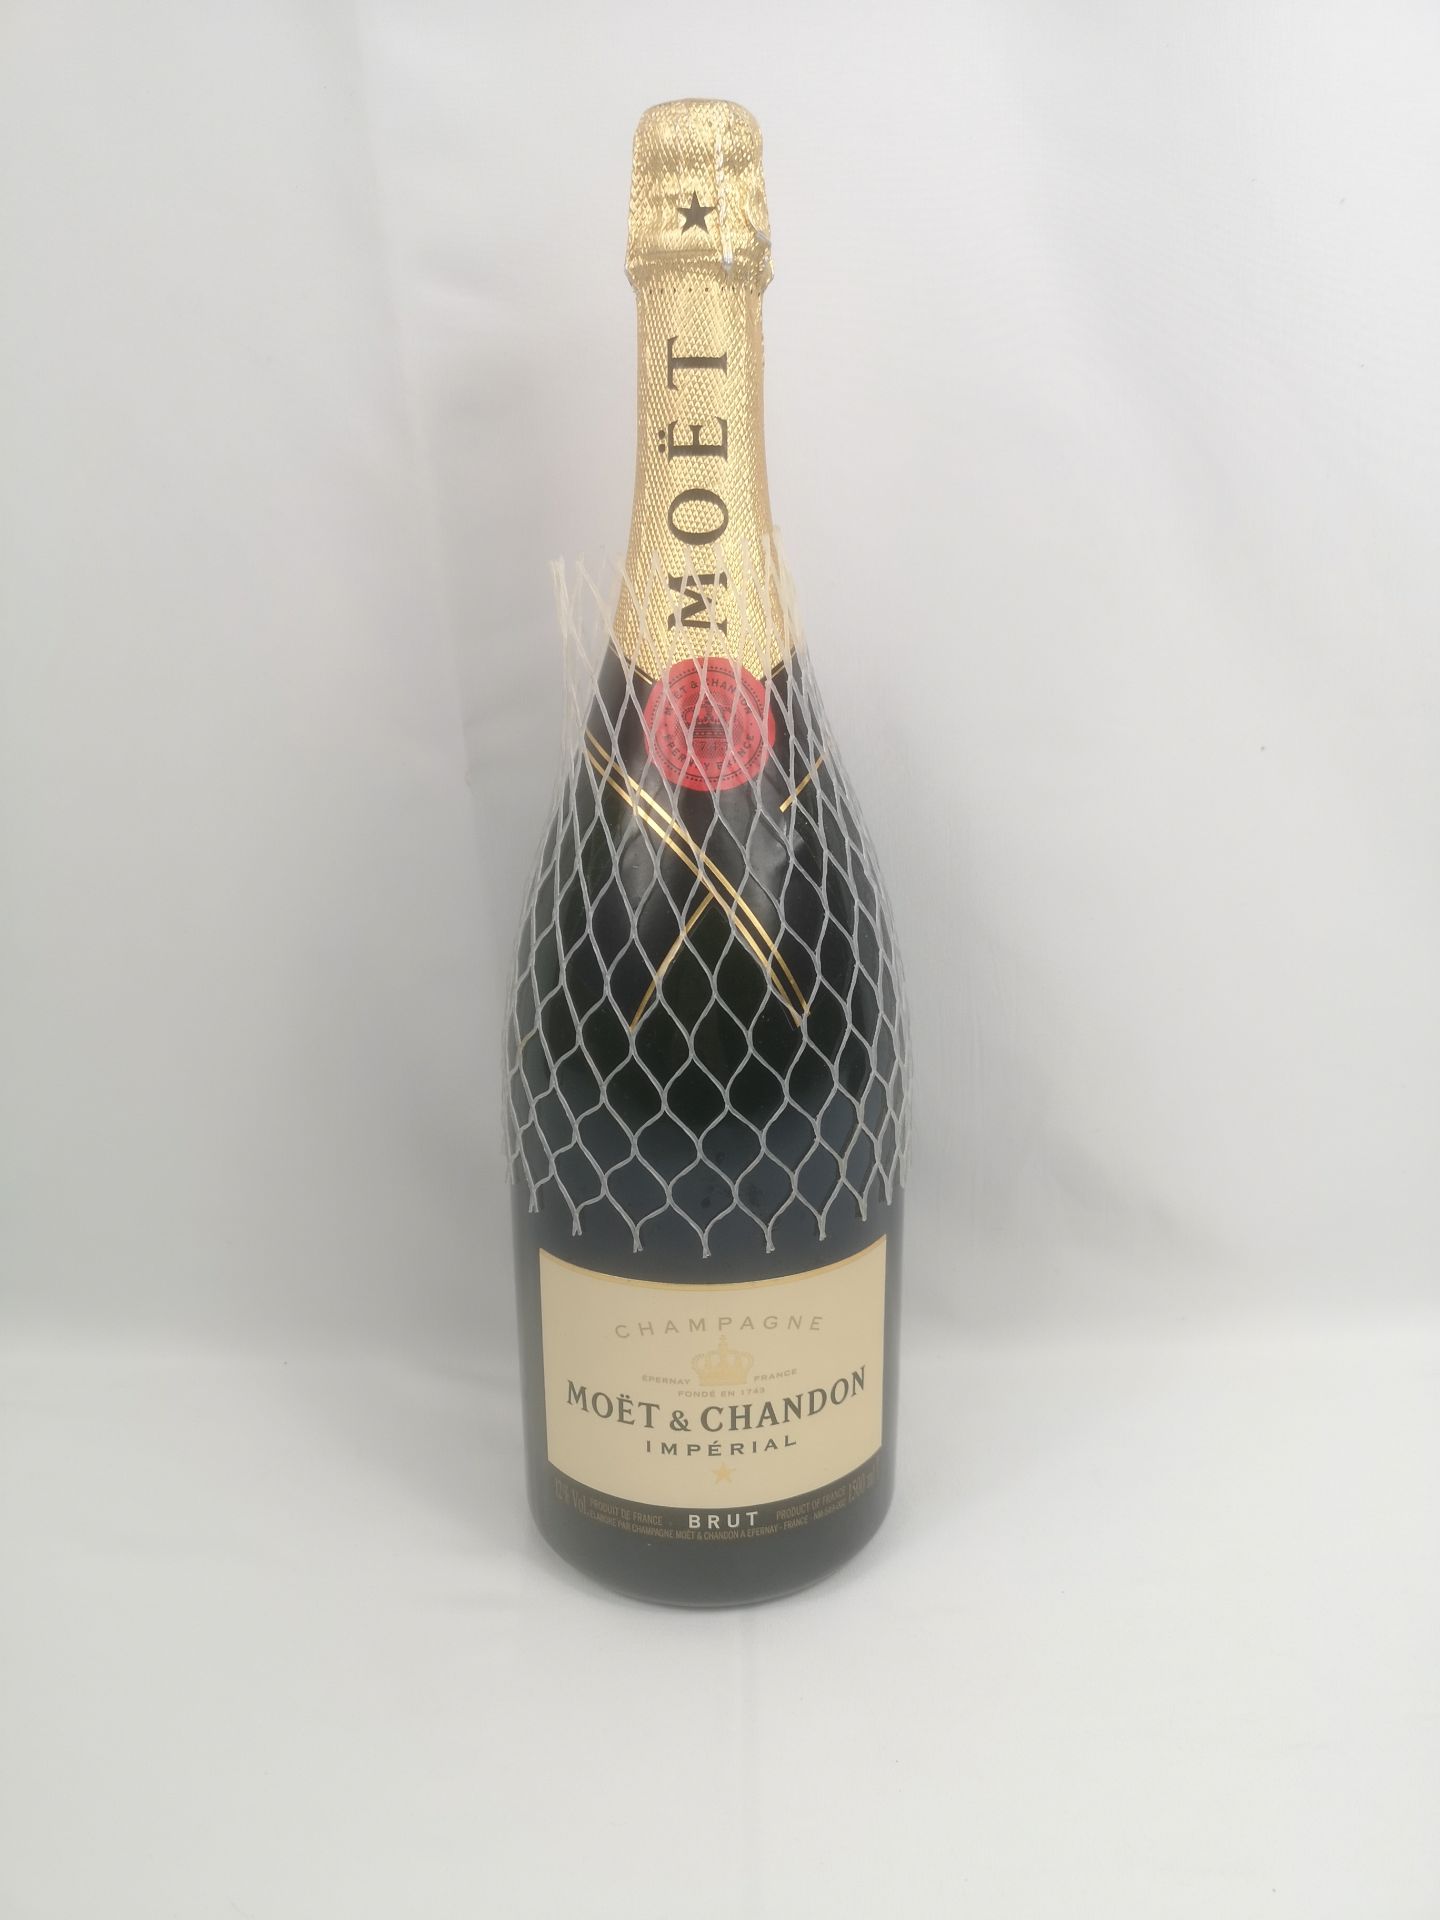 Magnum of Moet & Chandon champagne